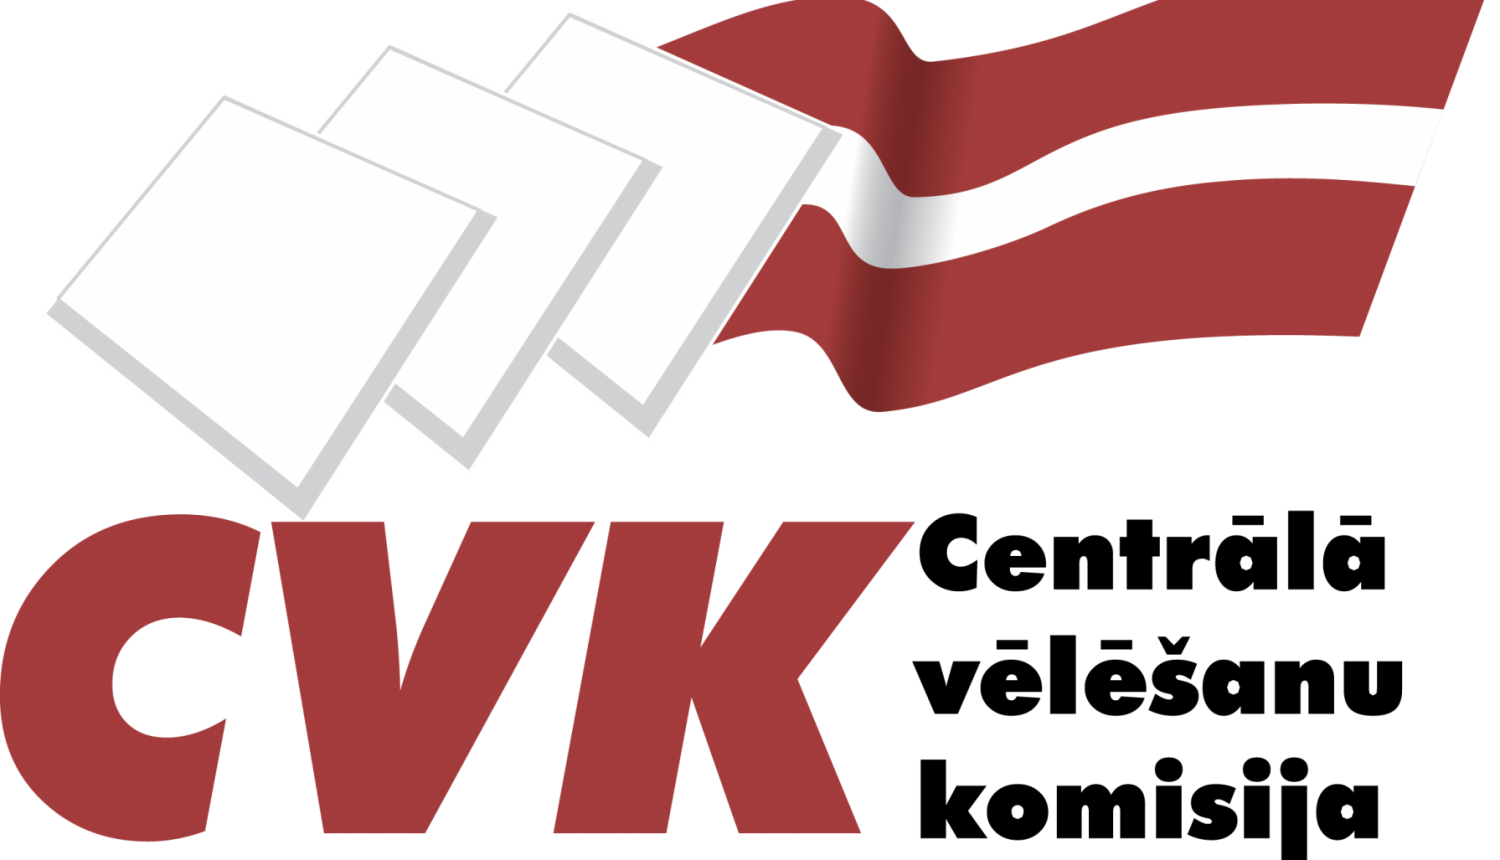 CVK_logo